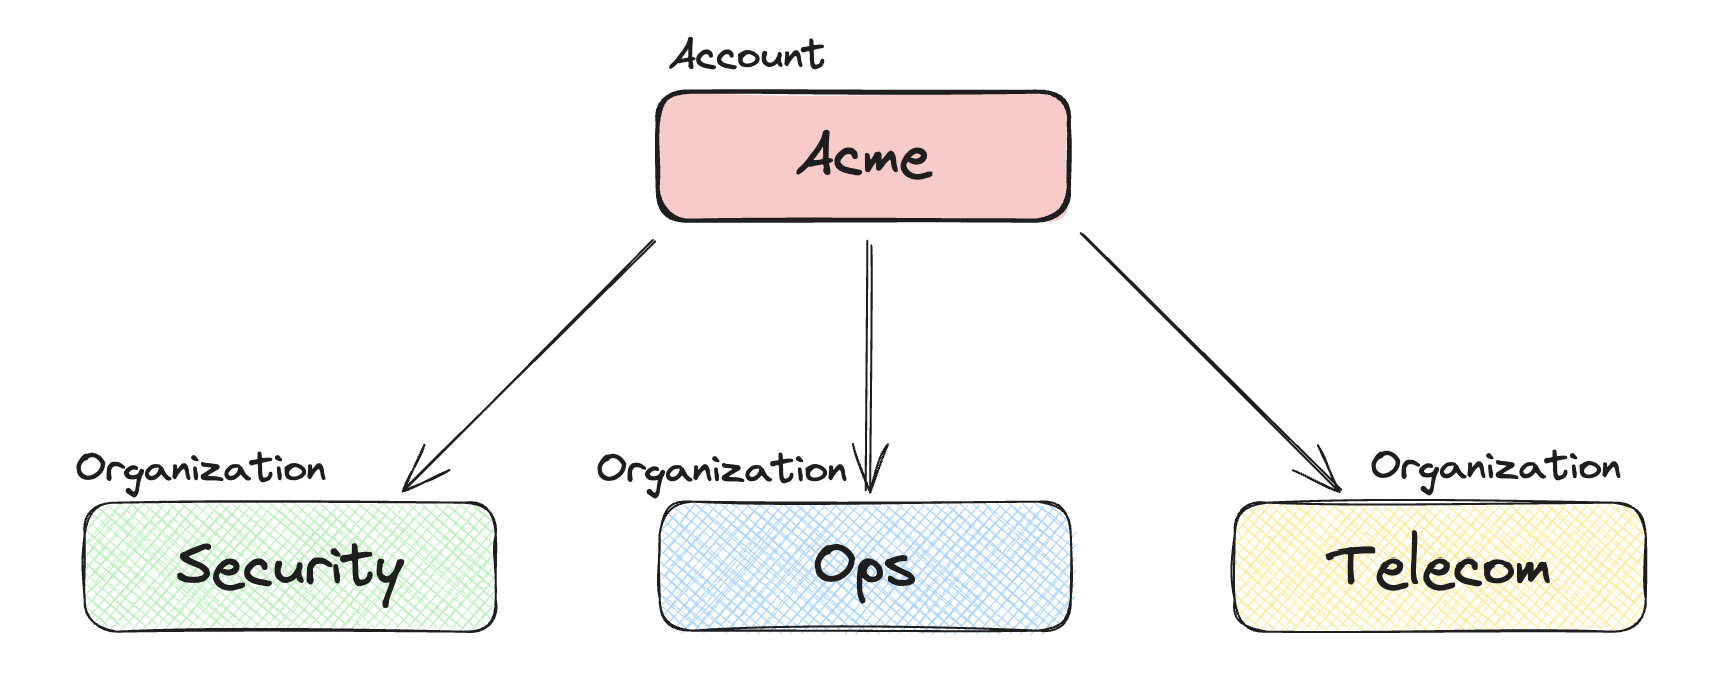 Accounts consist of Organizations